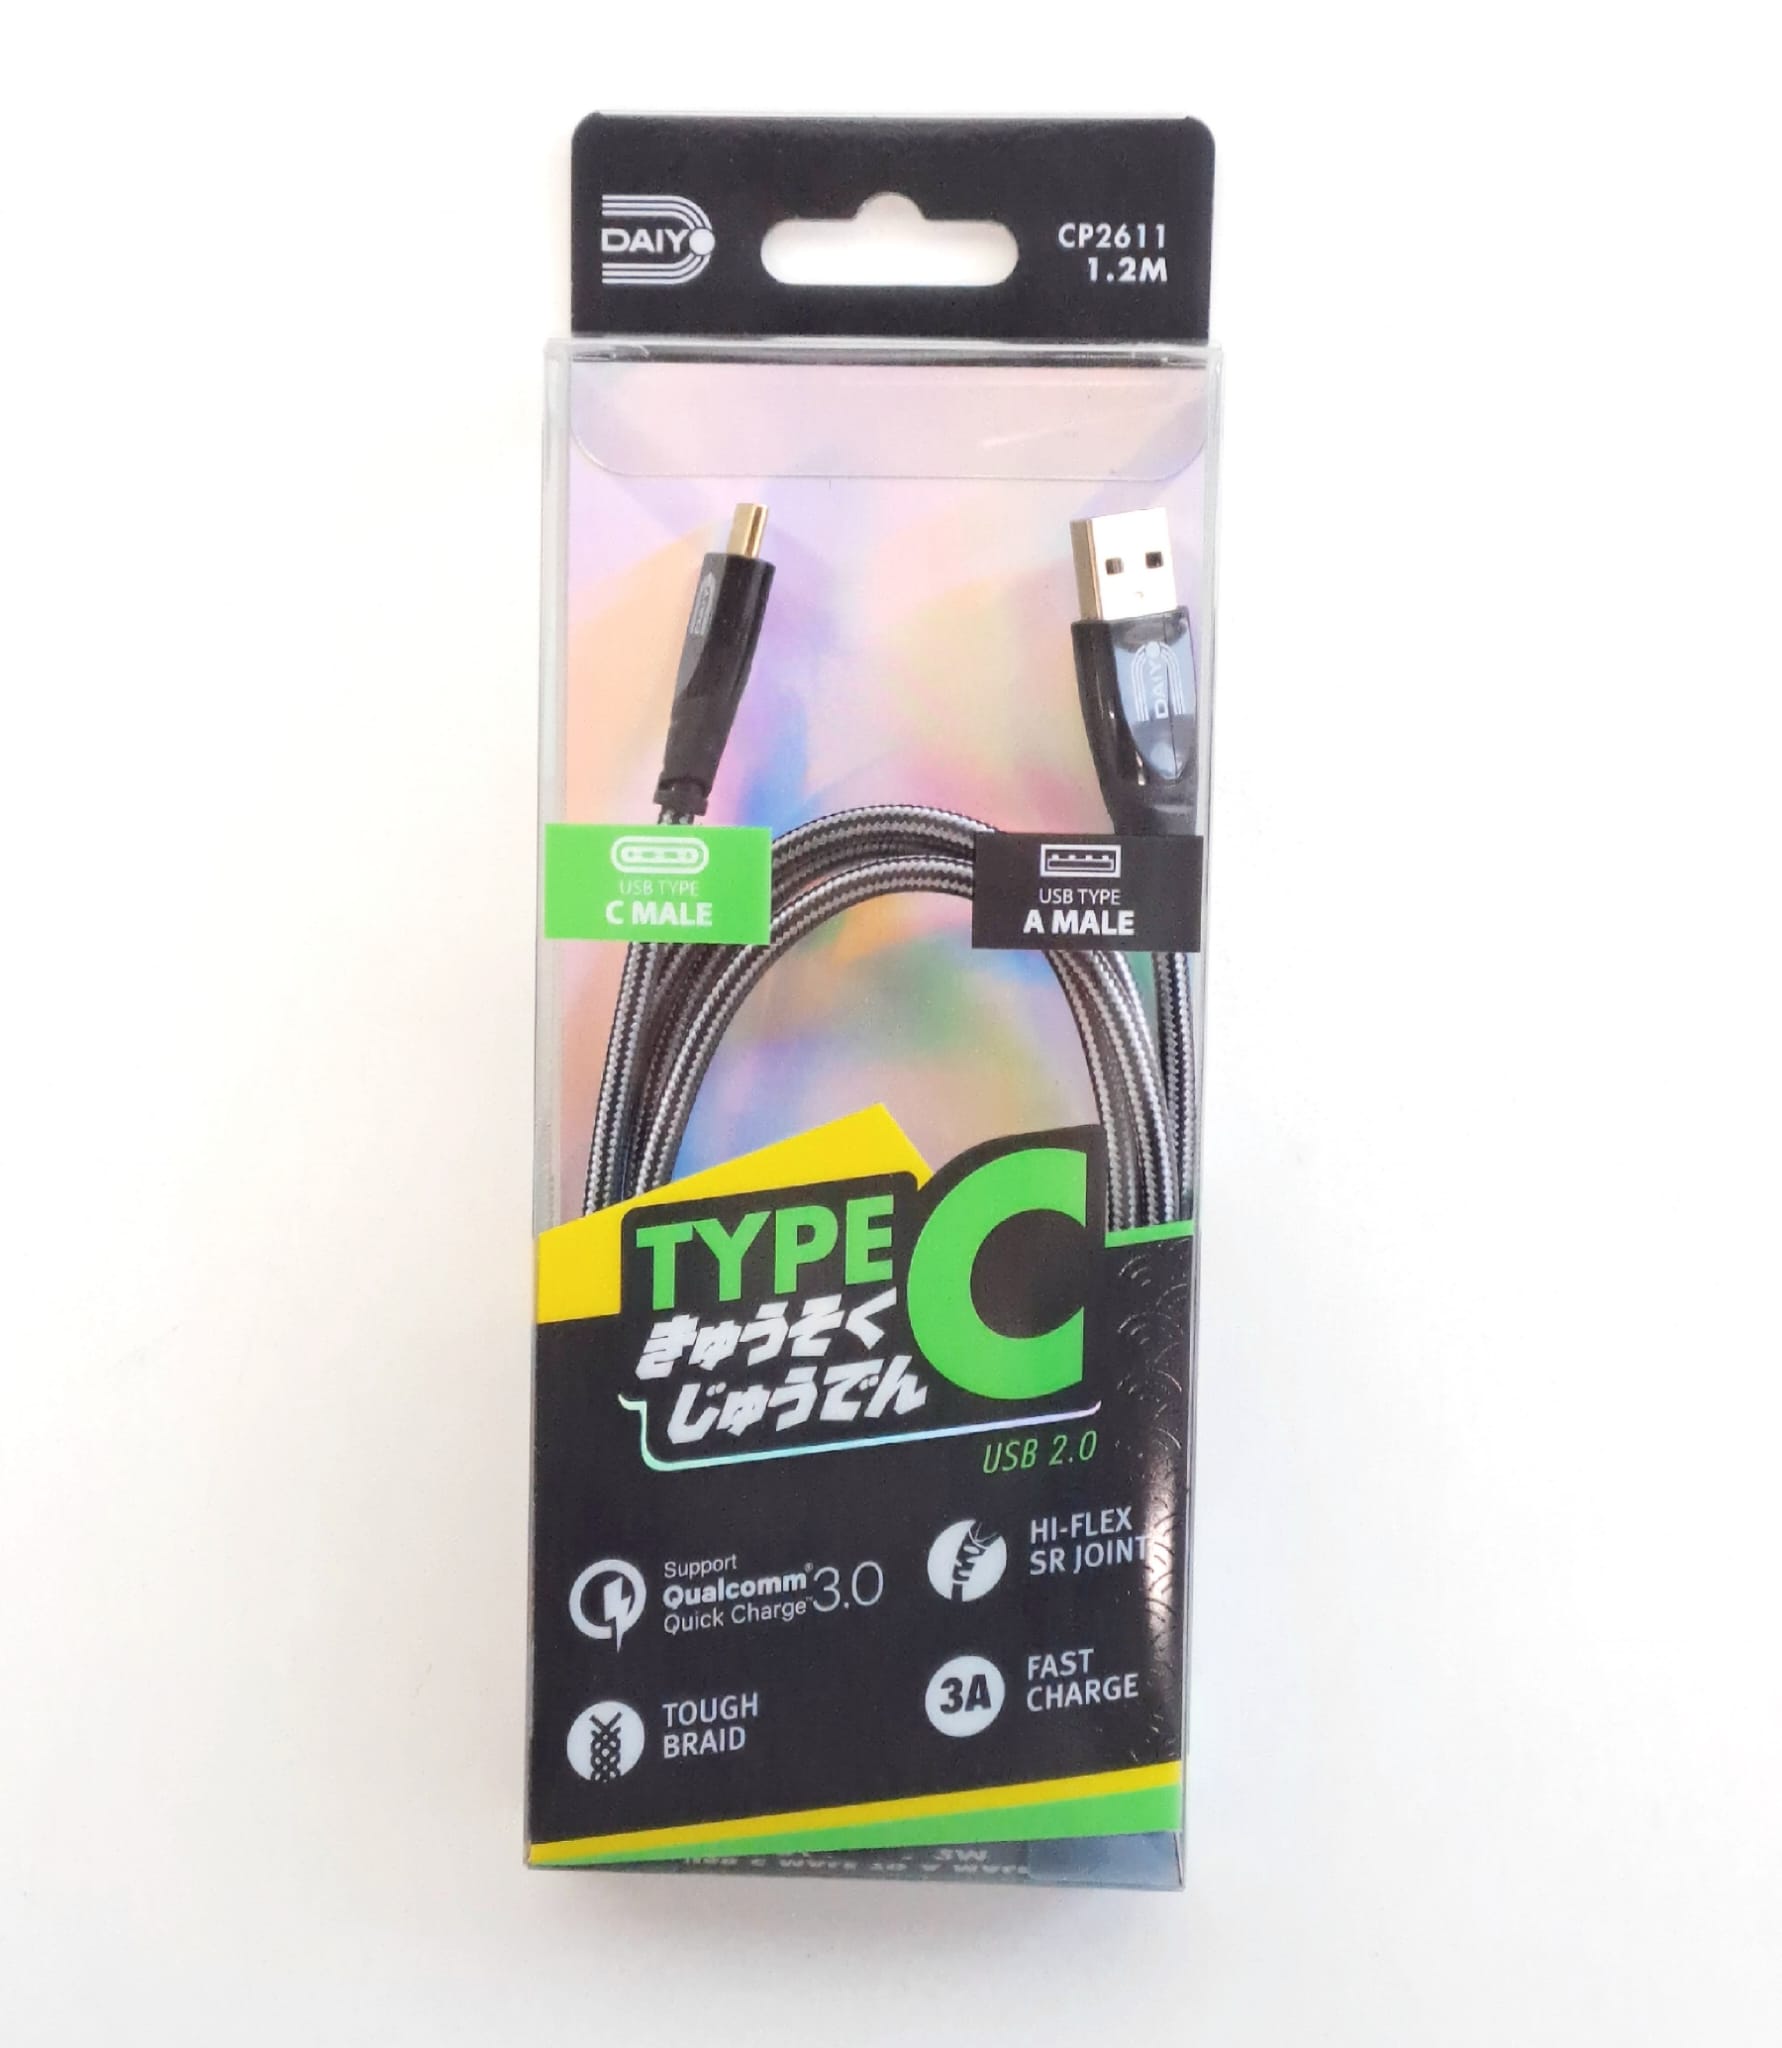 Daiyo USB 2.0 Type C Cable – AM/CM ECO 1.2M